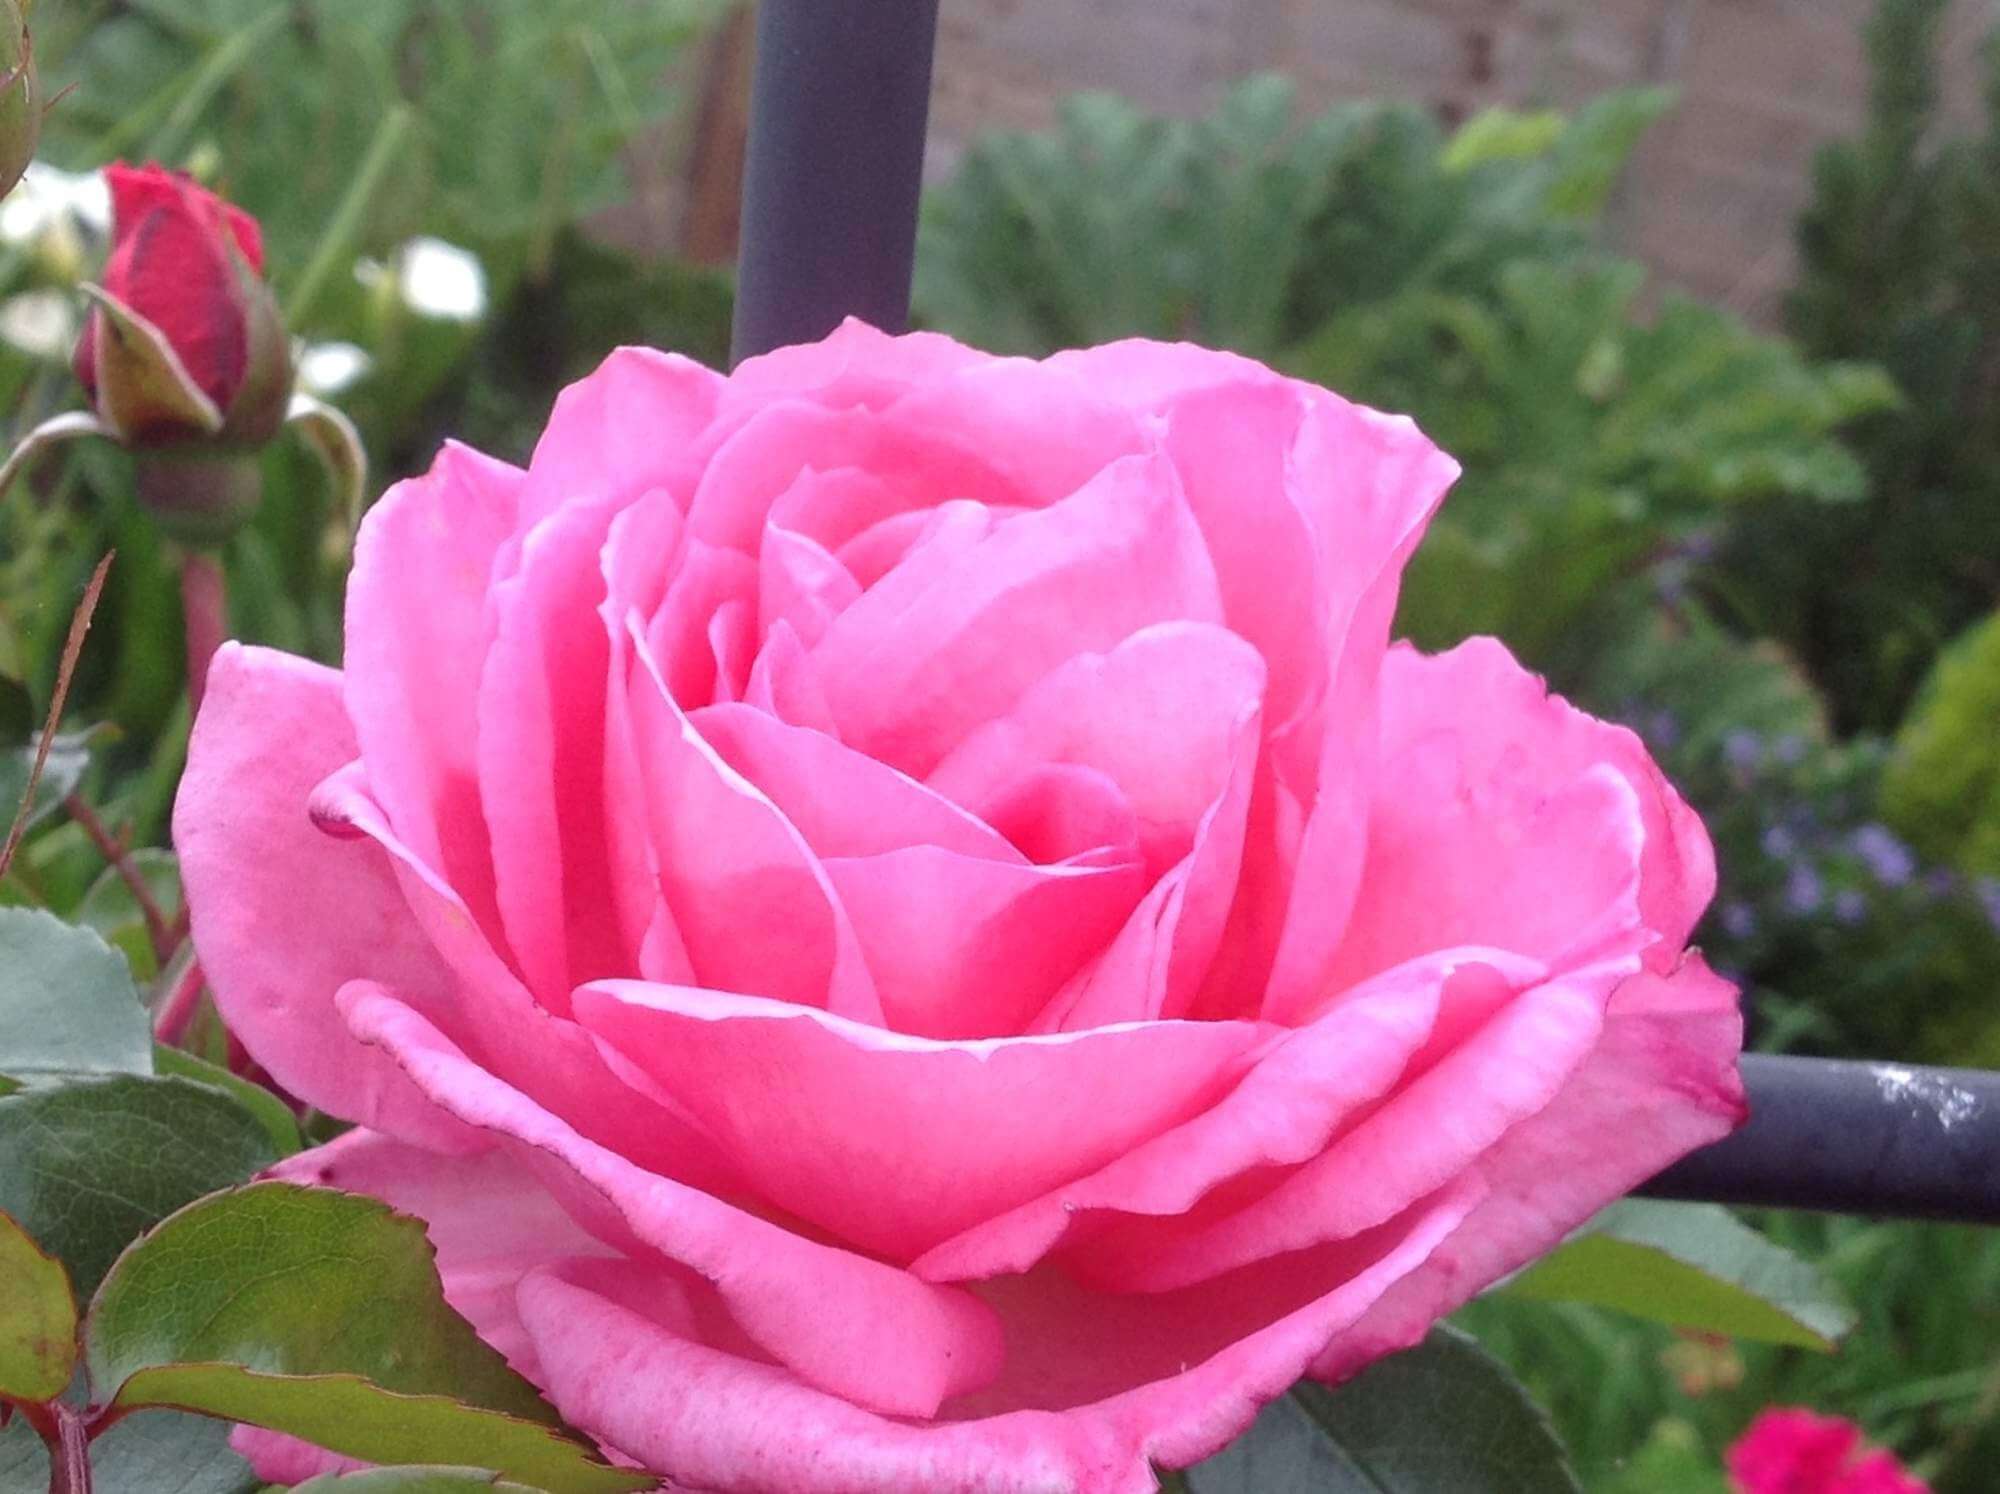 An exquisite pink rose courtesy of Windyridge's garden